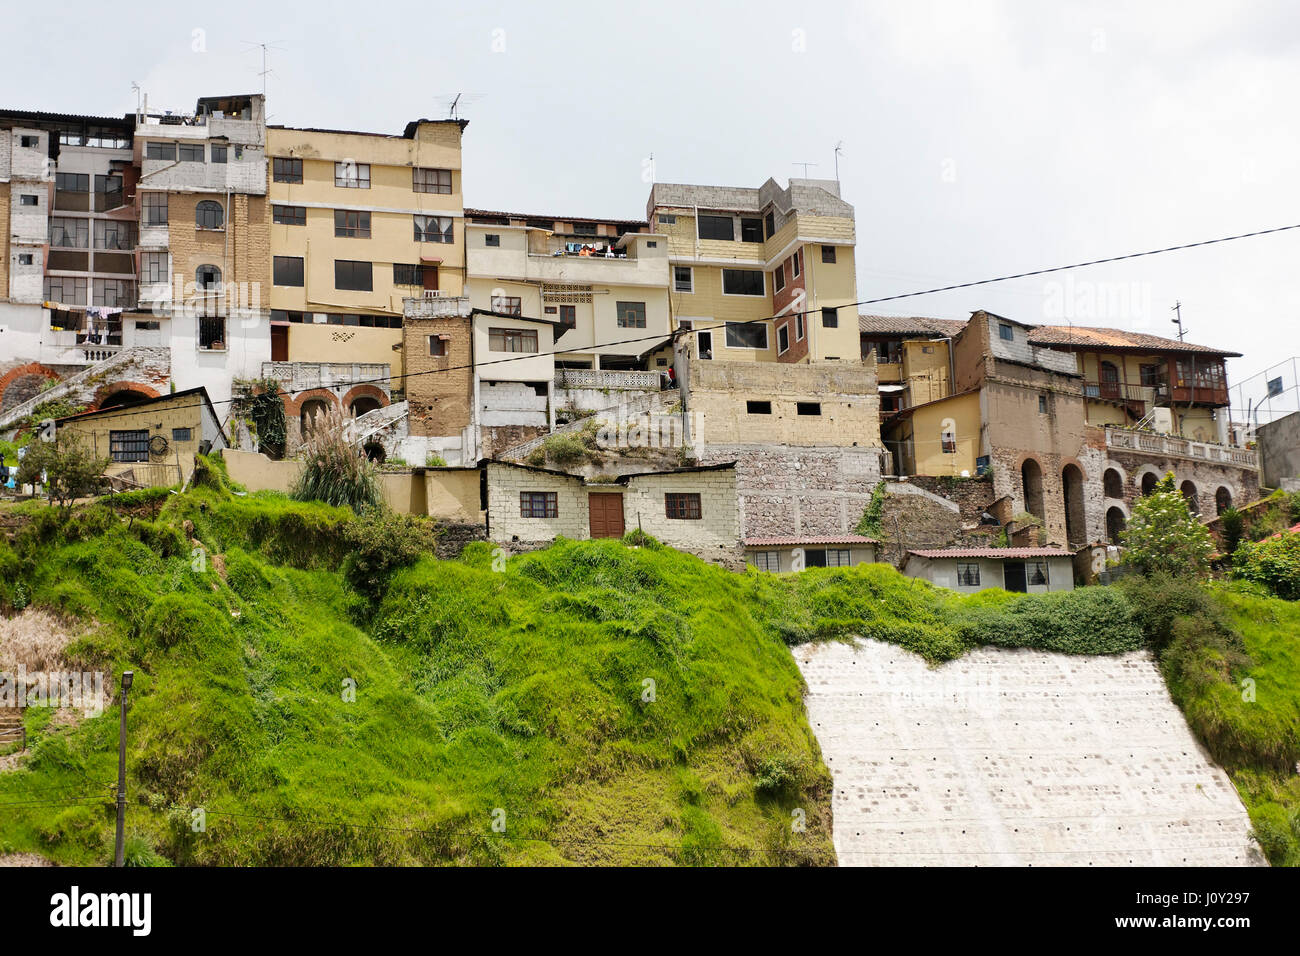 Slums of the Quito city, Ecuador Stock Photo